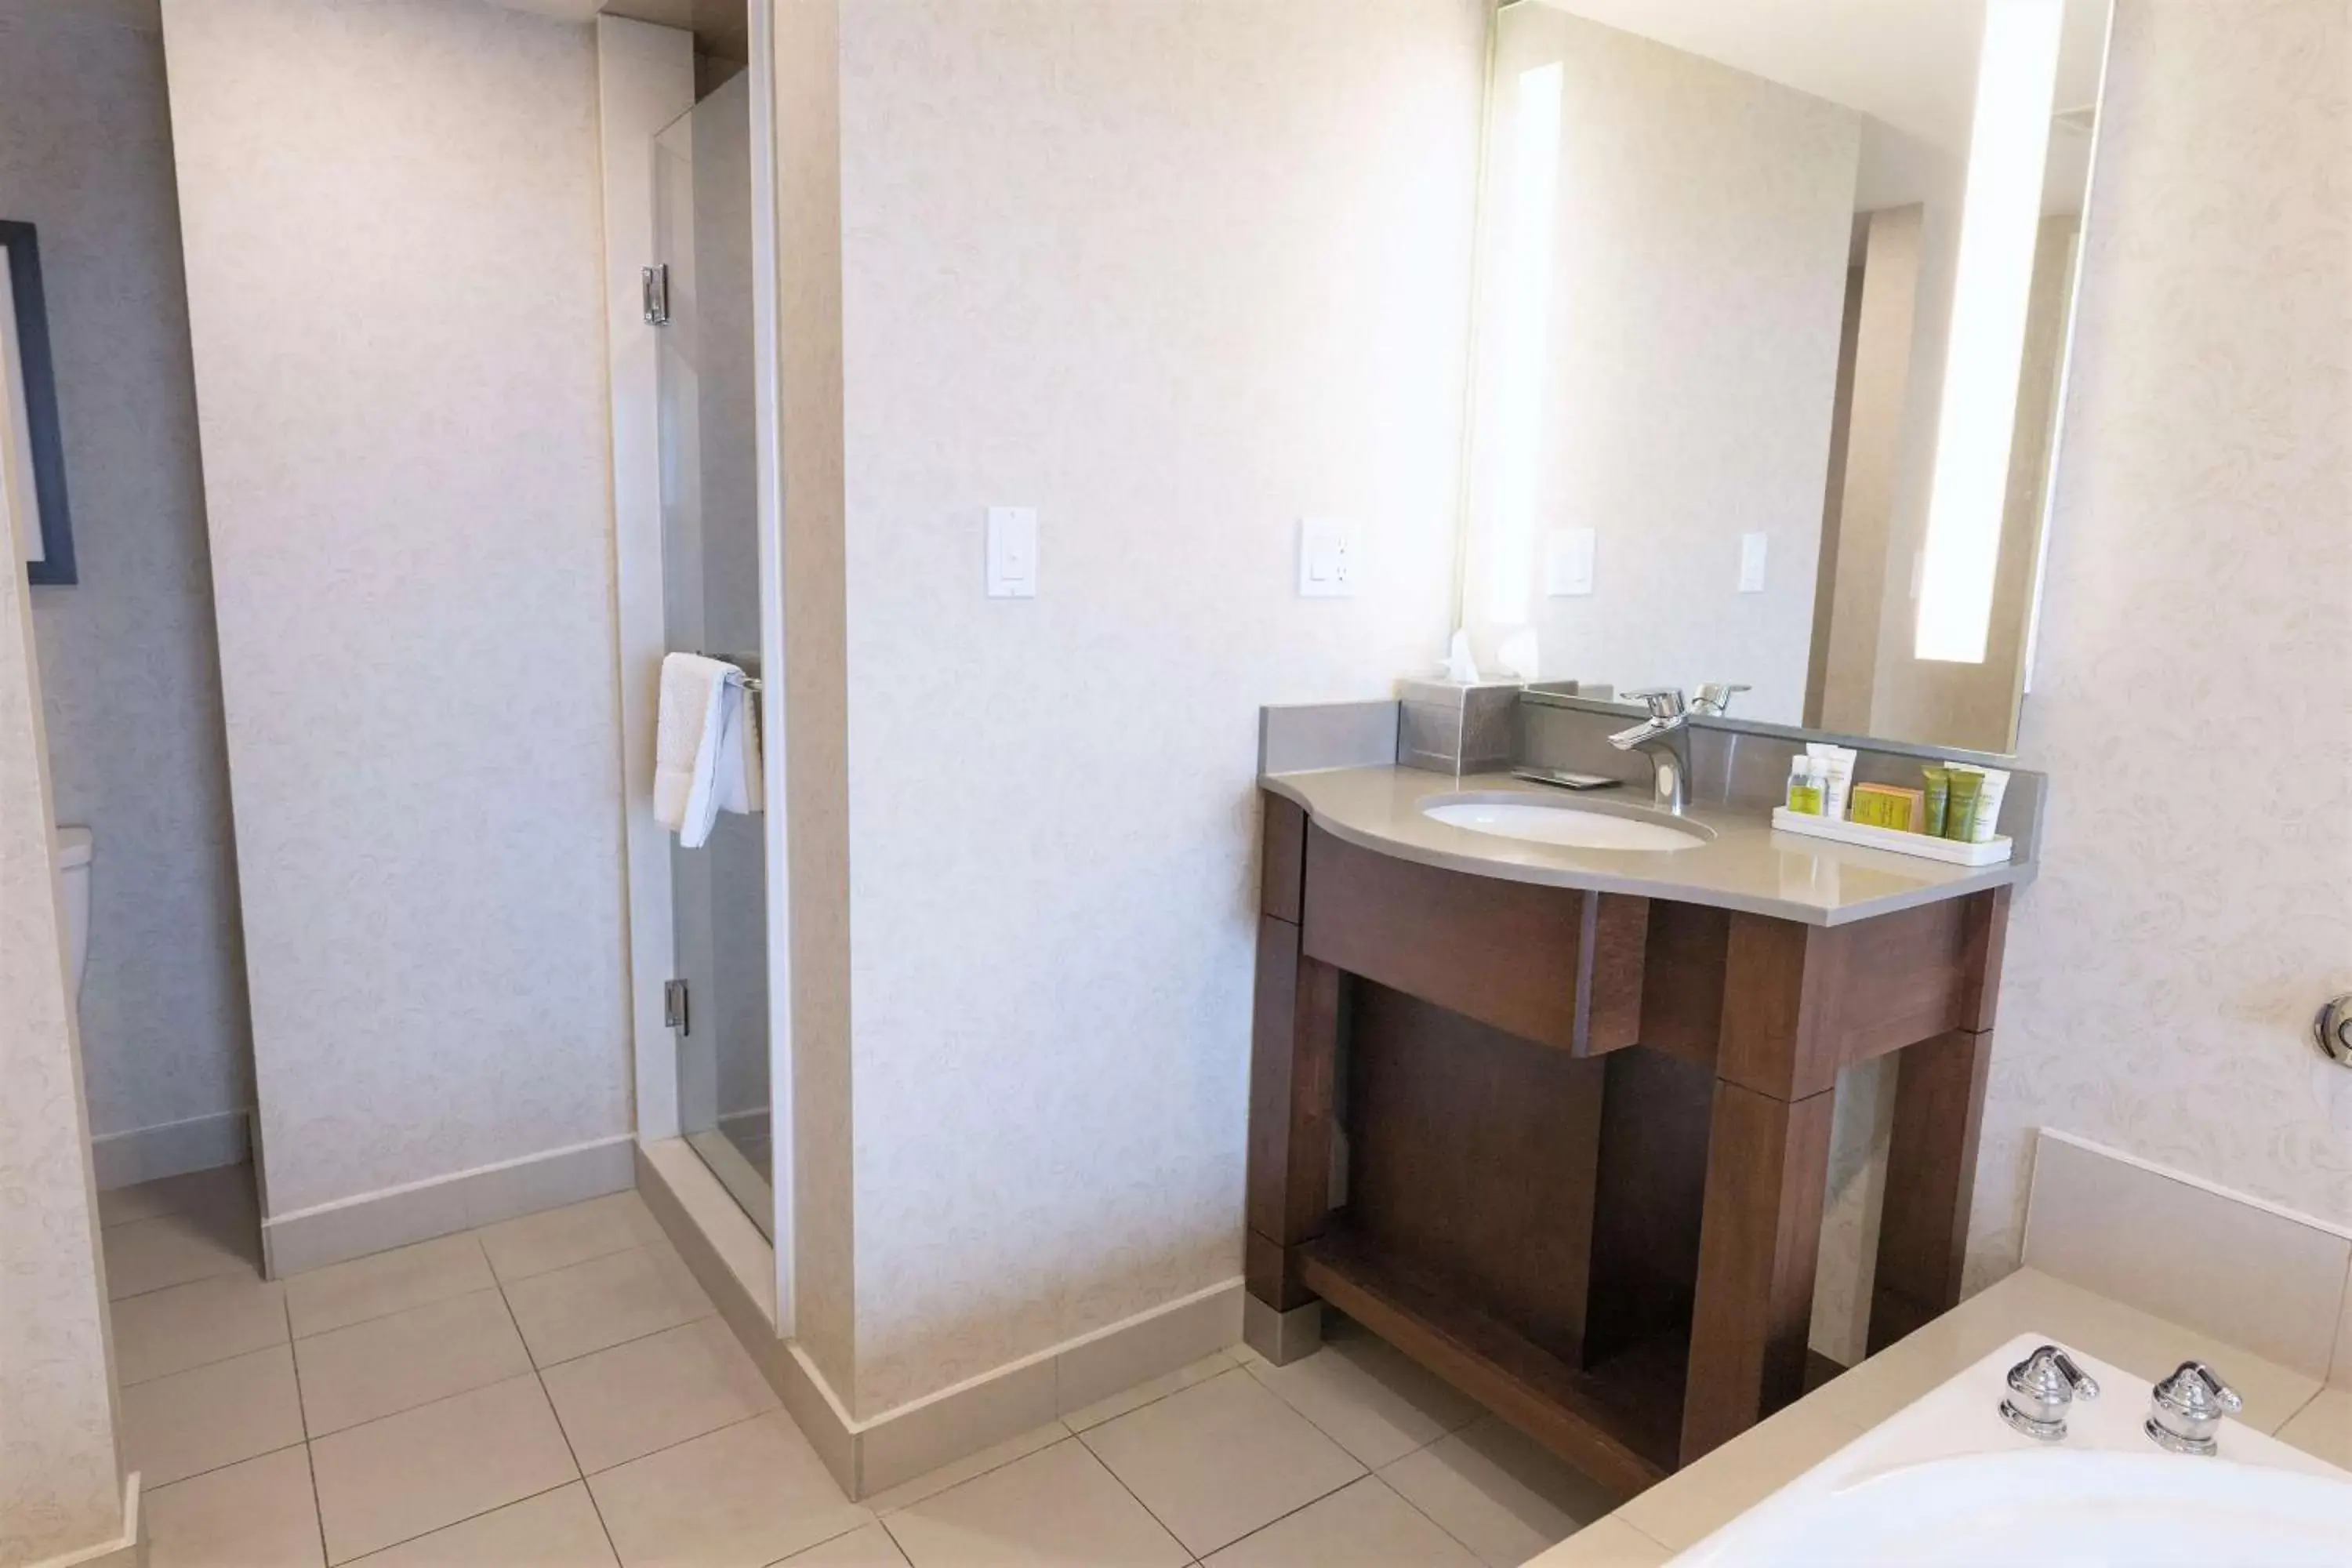 Bathroom in Hilton Niagara Falls/ Fallsview Hotel and Suites